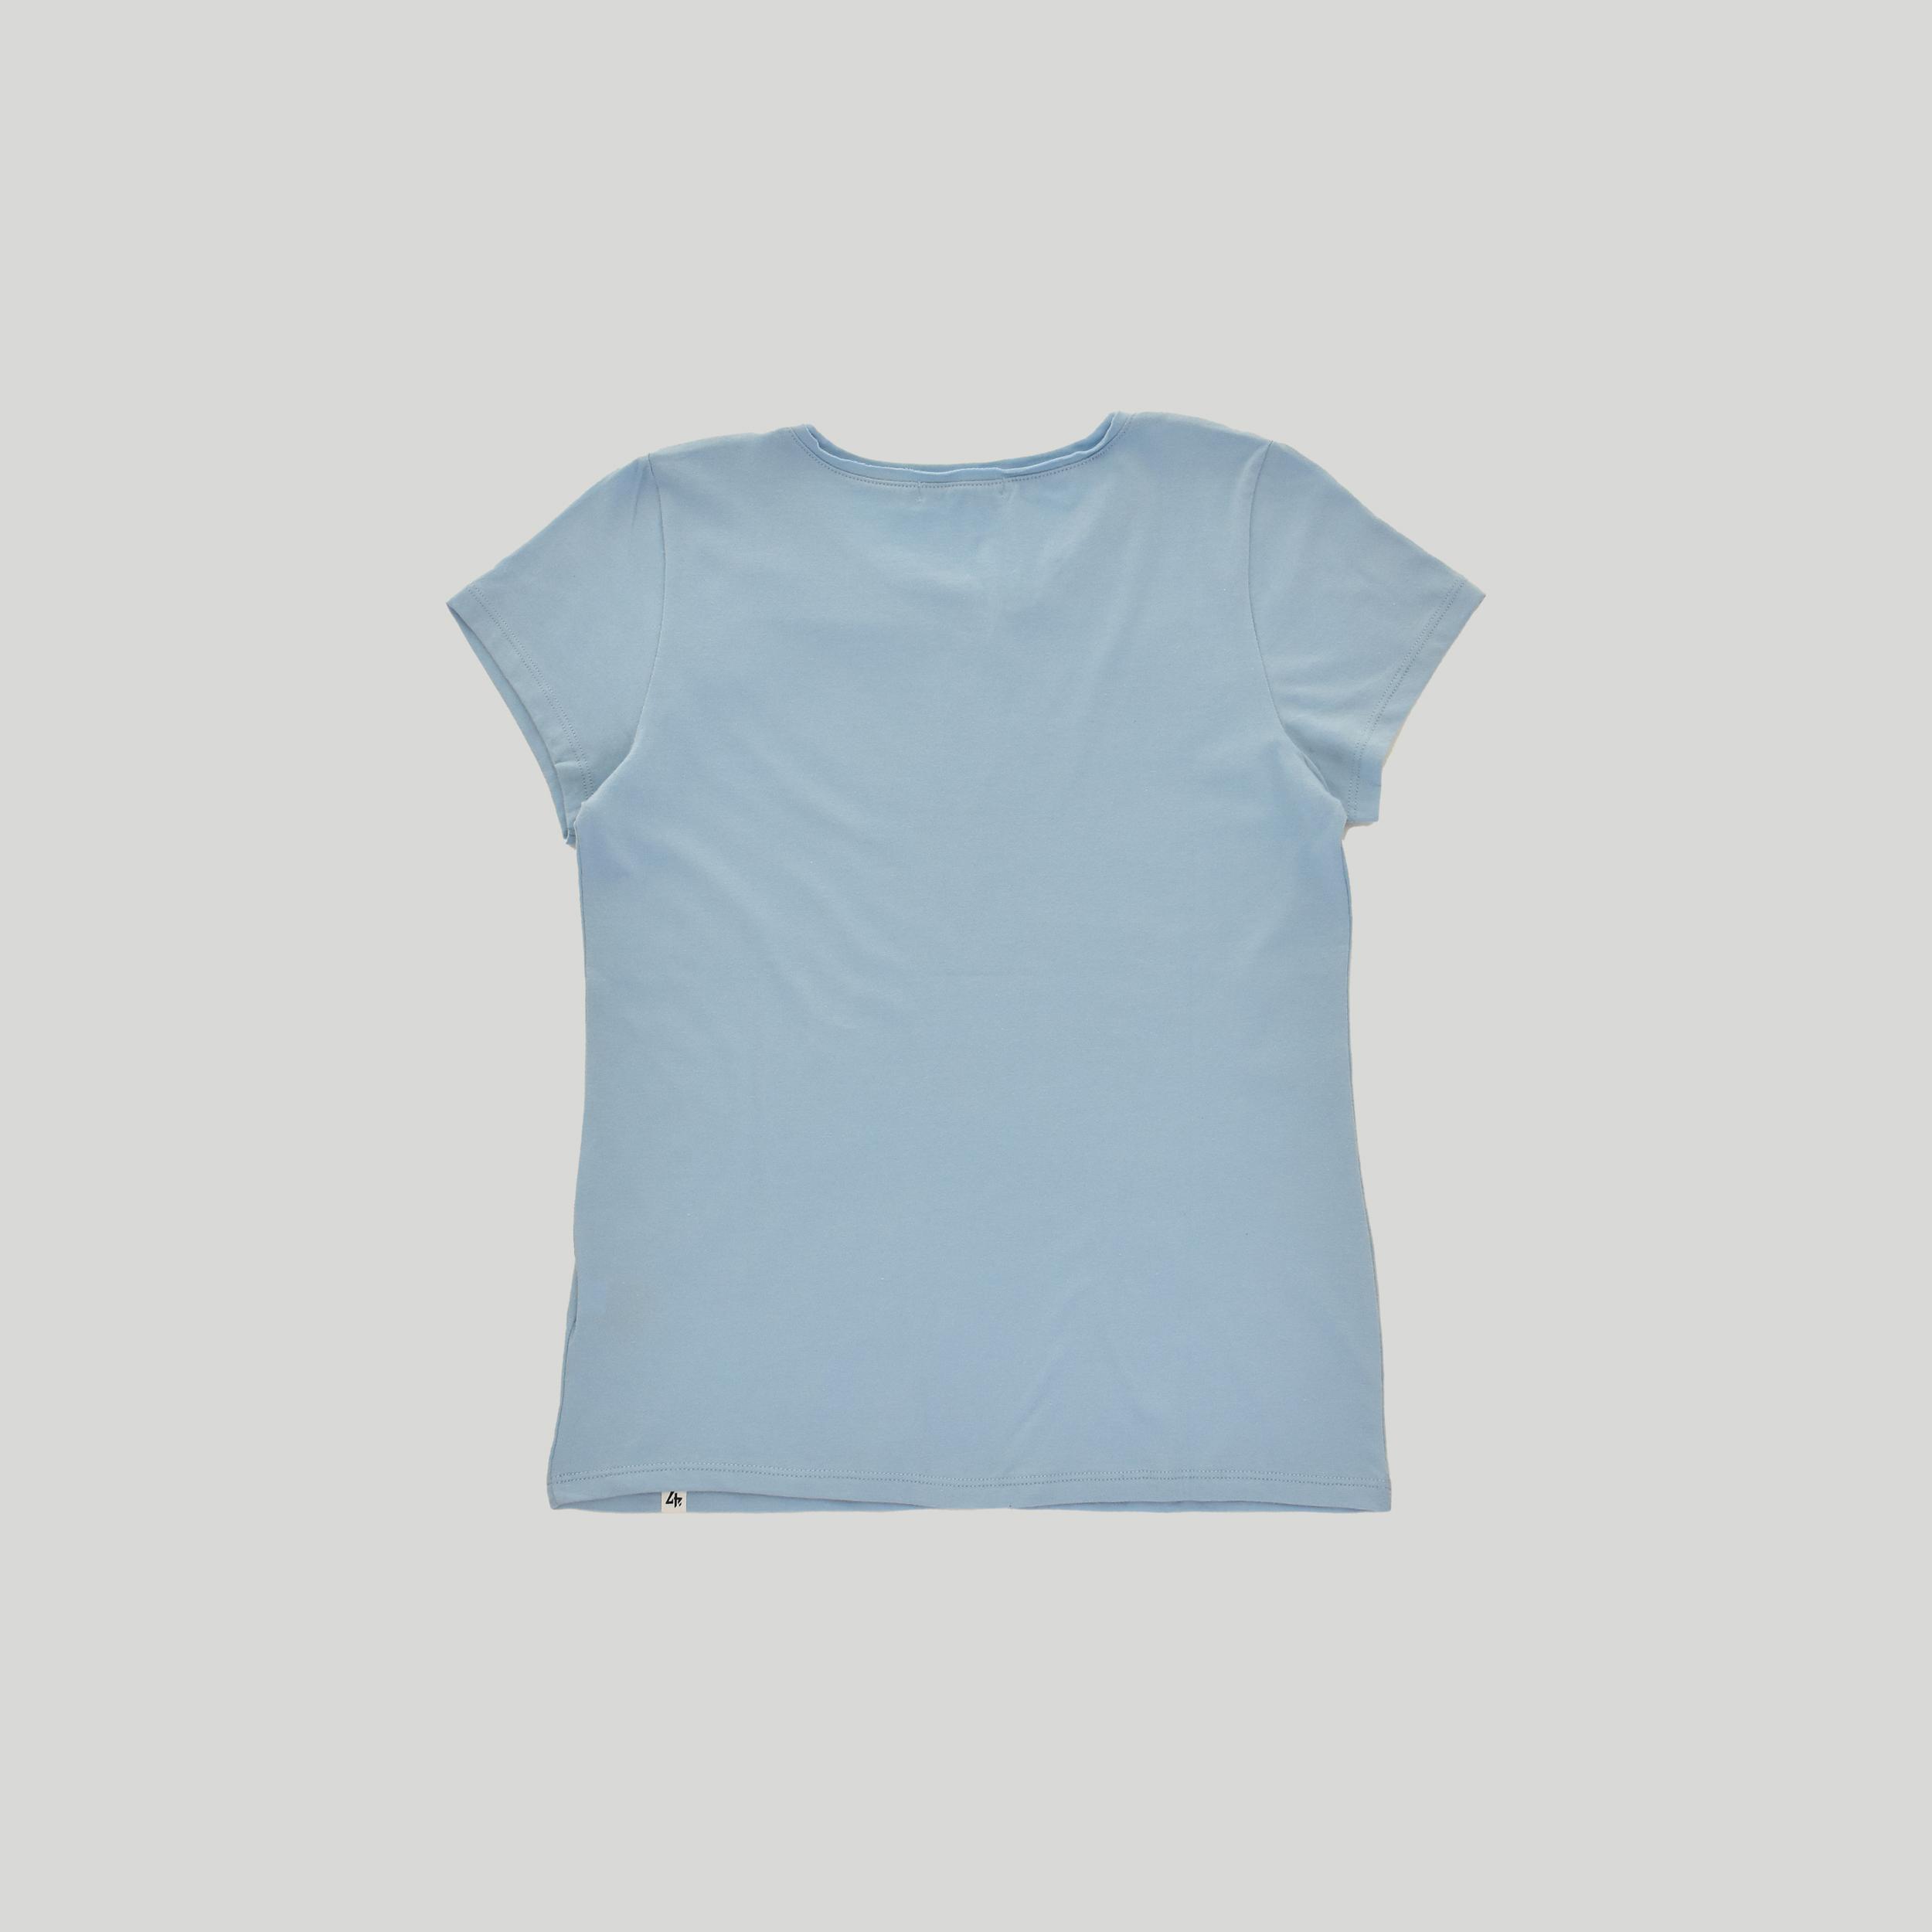 Lids Houston Oilers '47 Women's Frankie T-Shirt - White